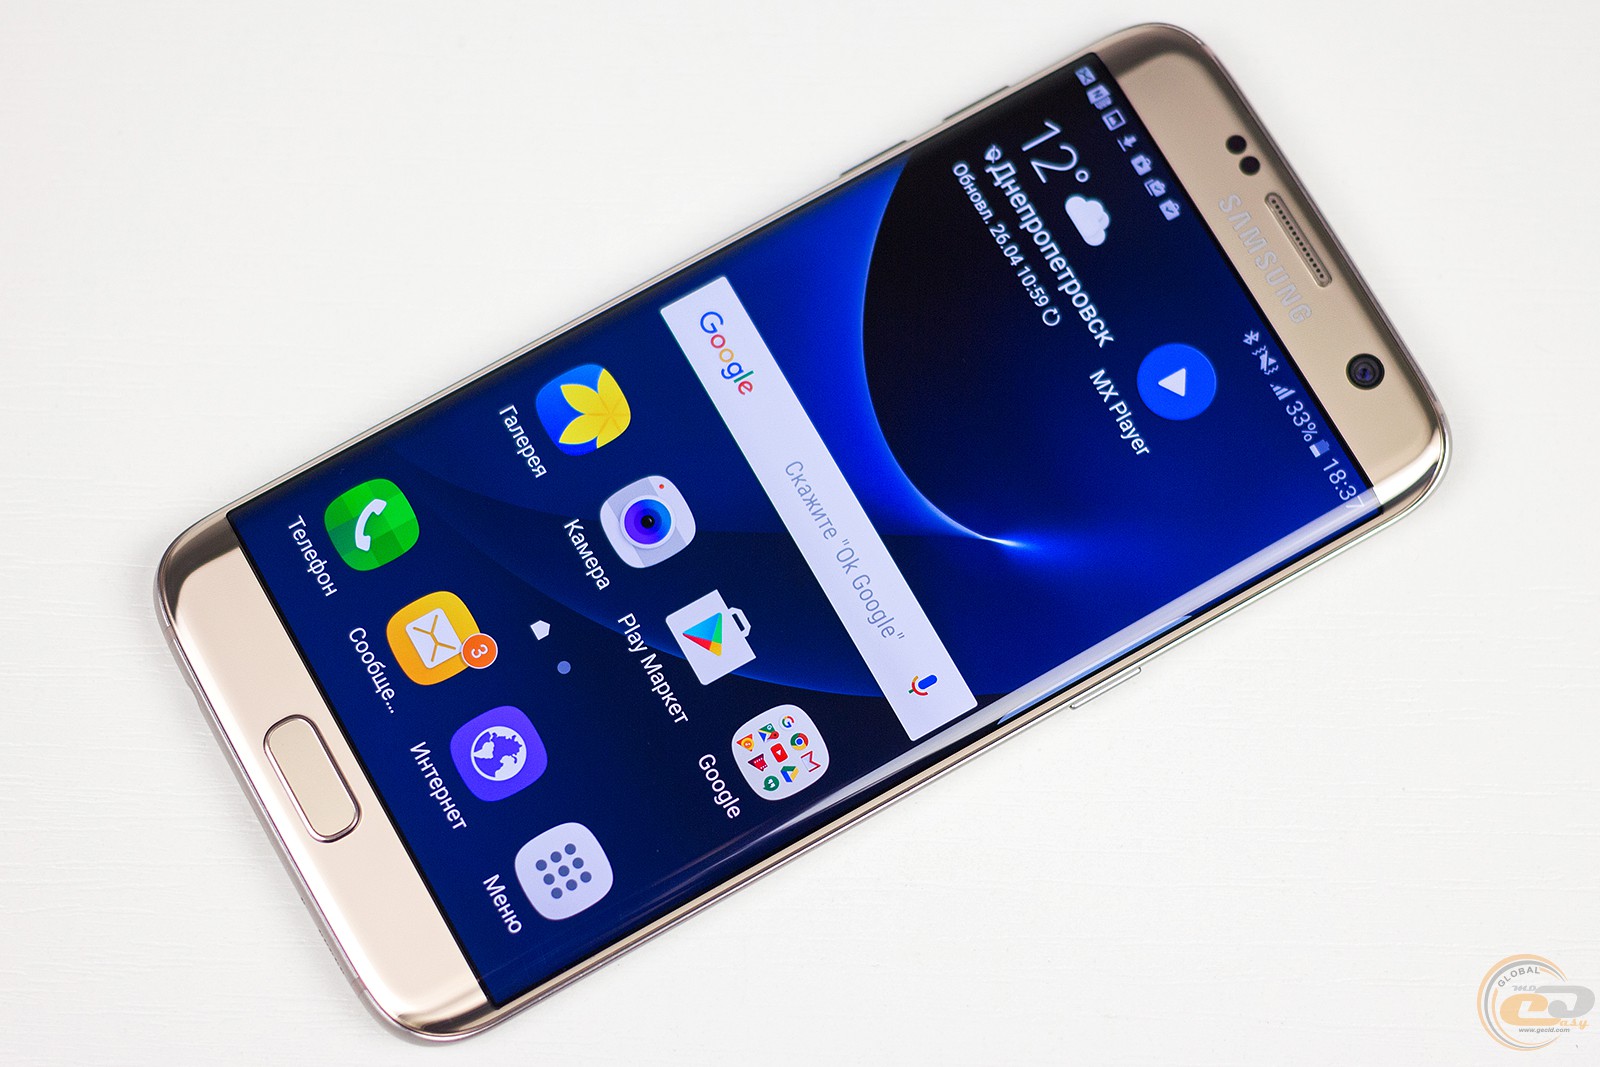 Deal: Unlocked Samsung Galaxy S7 Duos $529.99 - 5/24/16